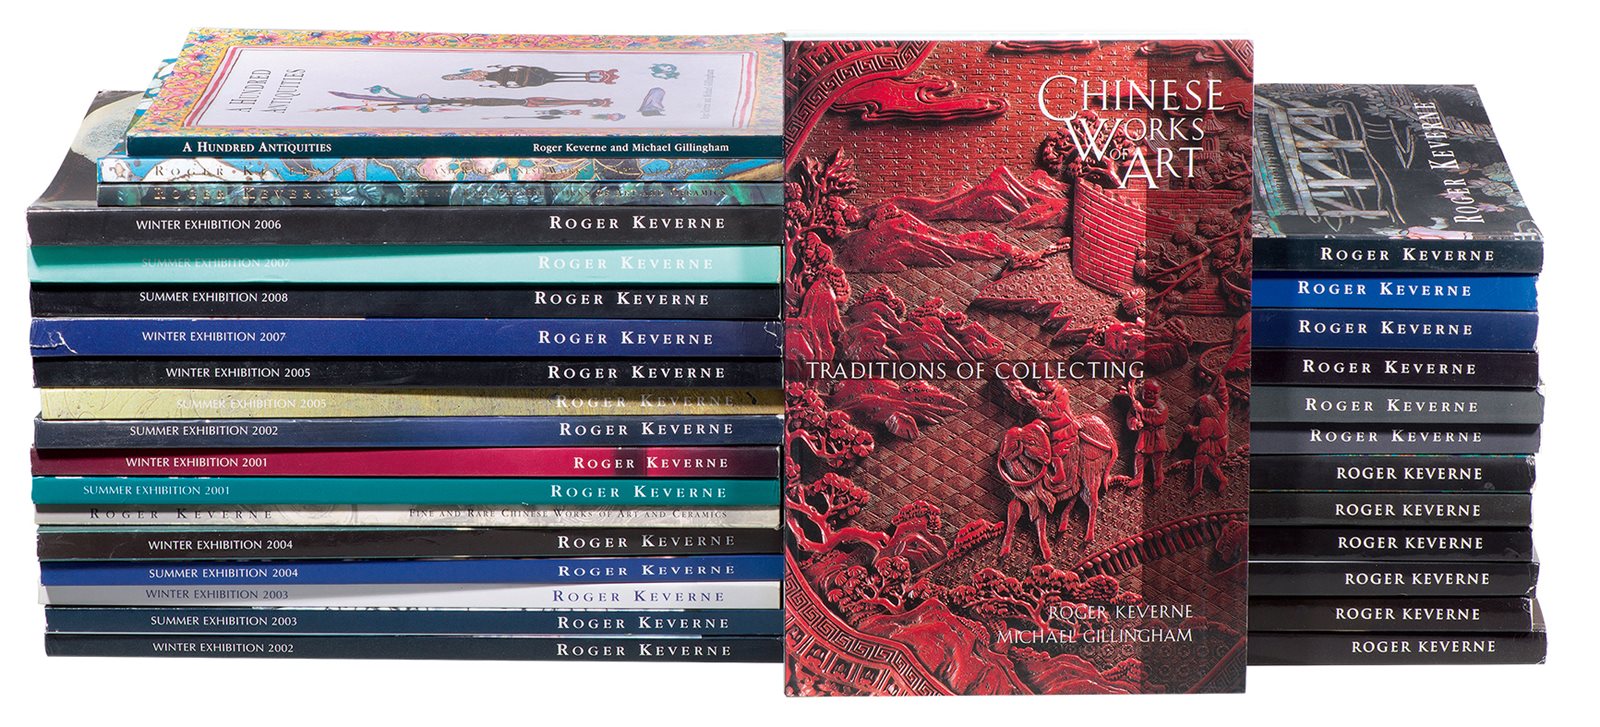 英国古董商Roger Kevener中国艺术品展览图录32册